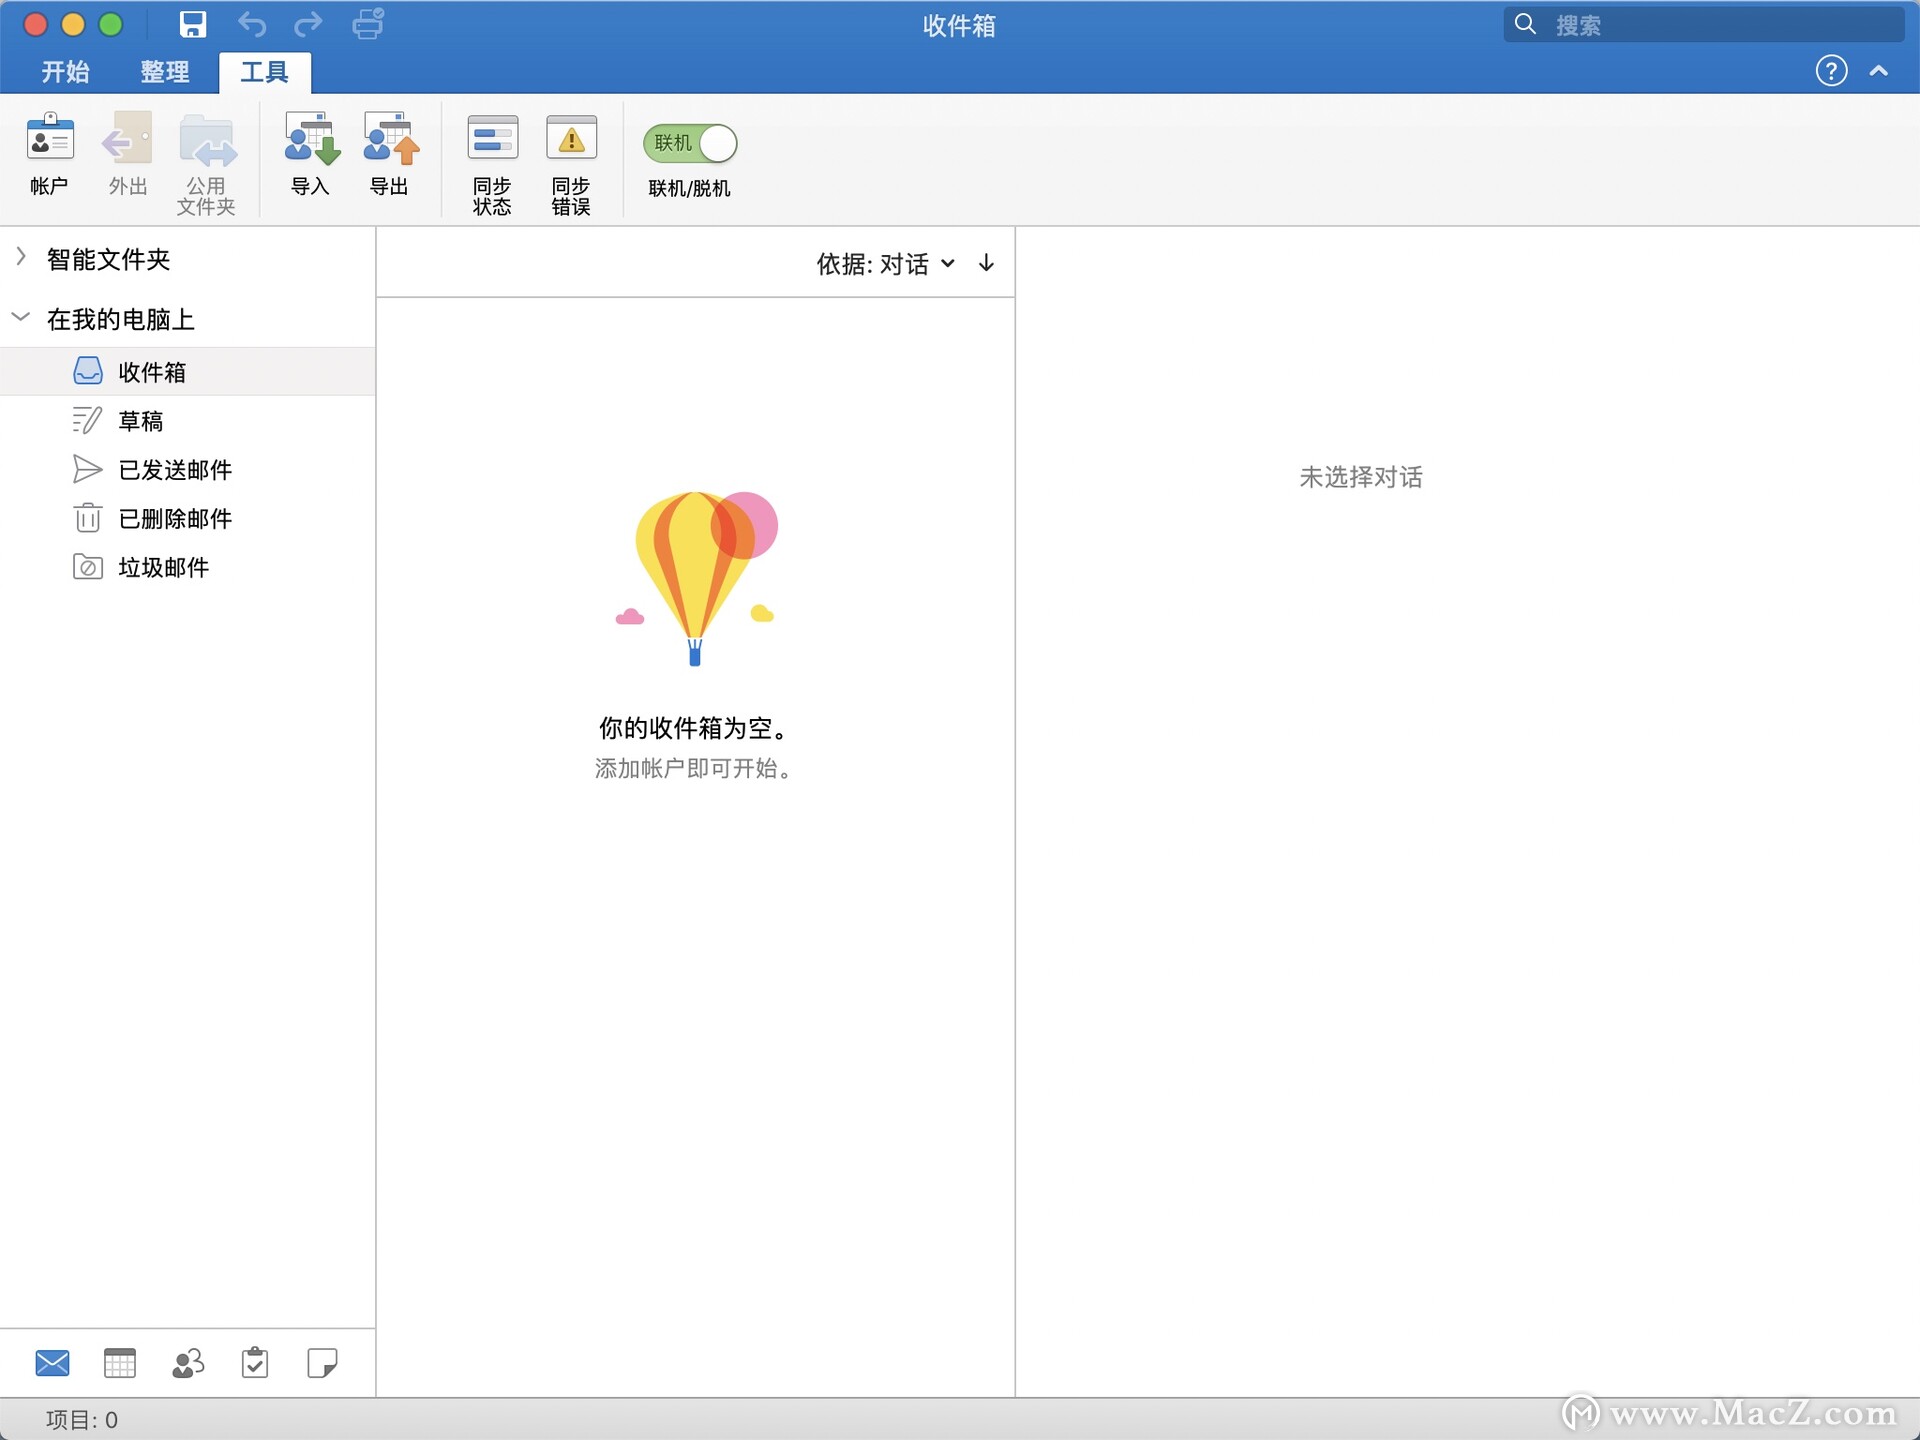 outlook 2019 mac-Microsoft Outlook 2019 for mac(专业的电子邮件和日历应用)- Mac下载插图4